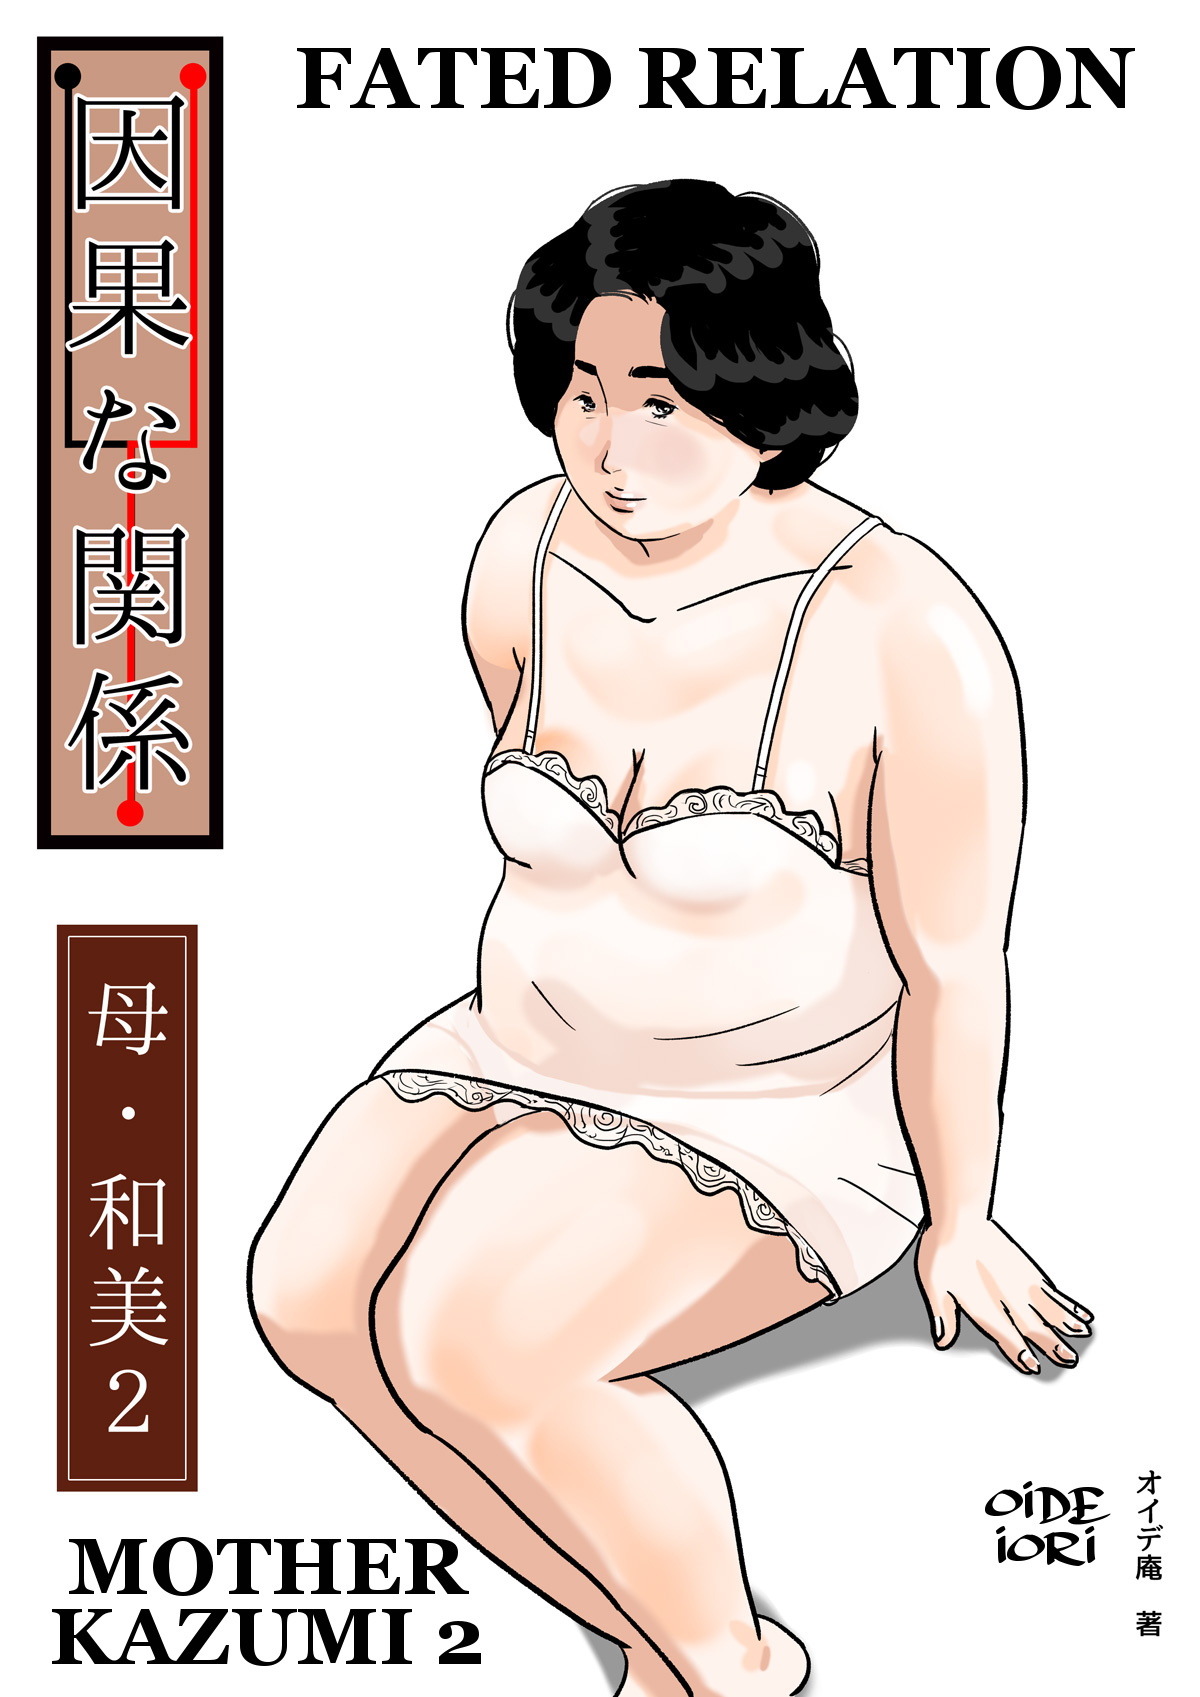 Oide Iori Fated Relation Mother Kazumi 2 Hentai Comic